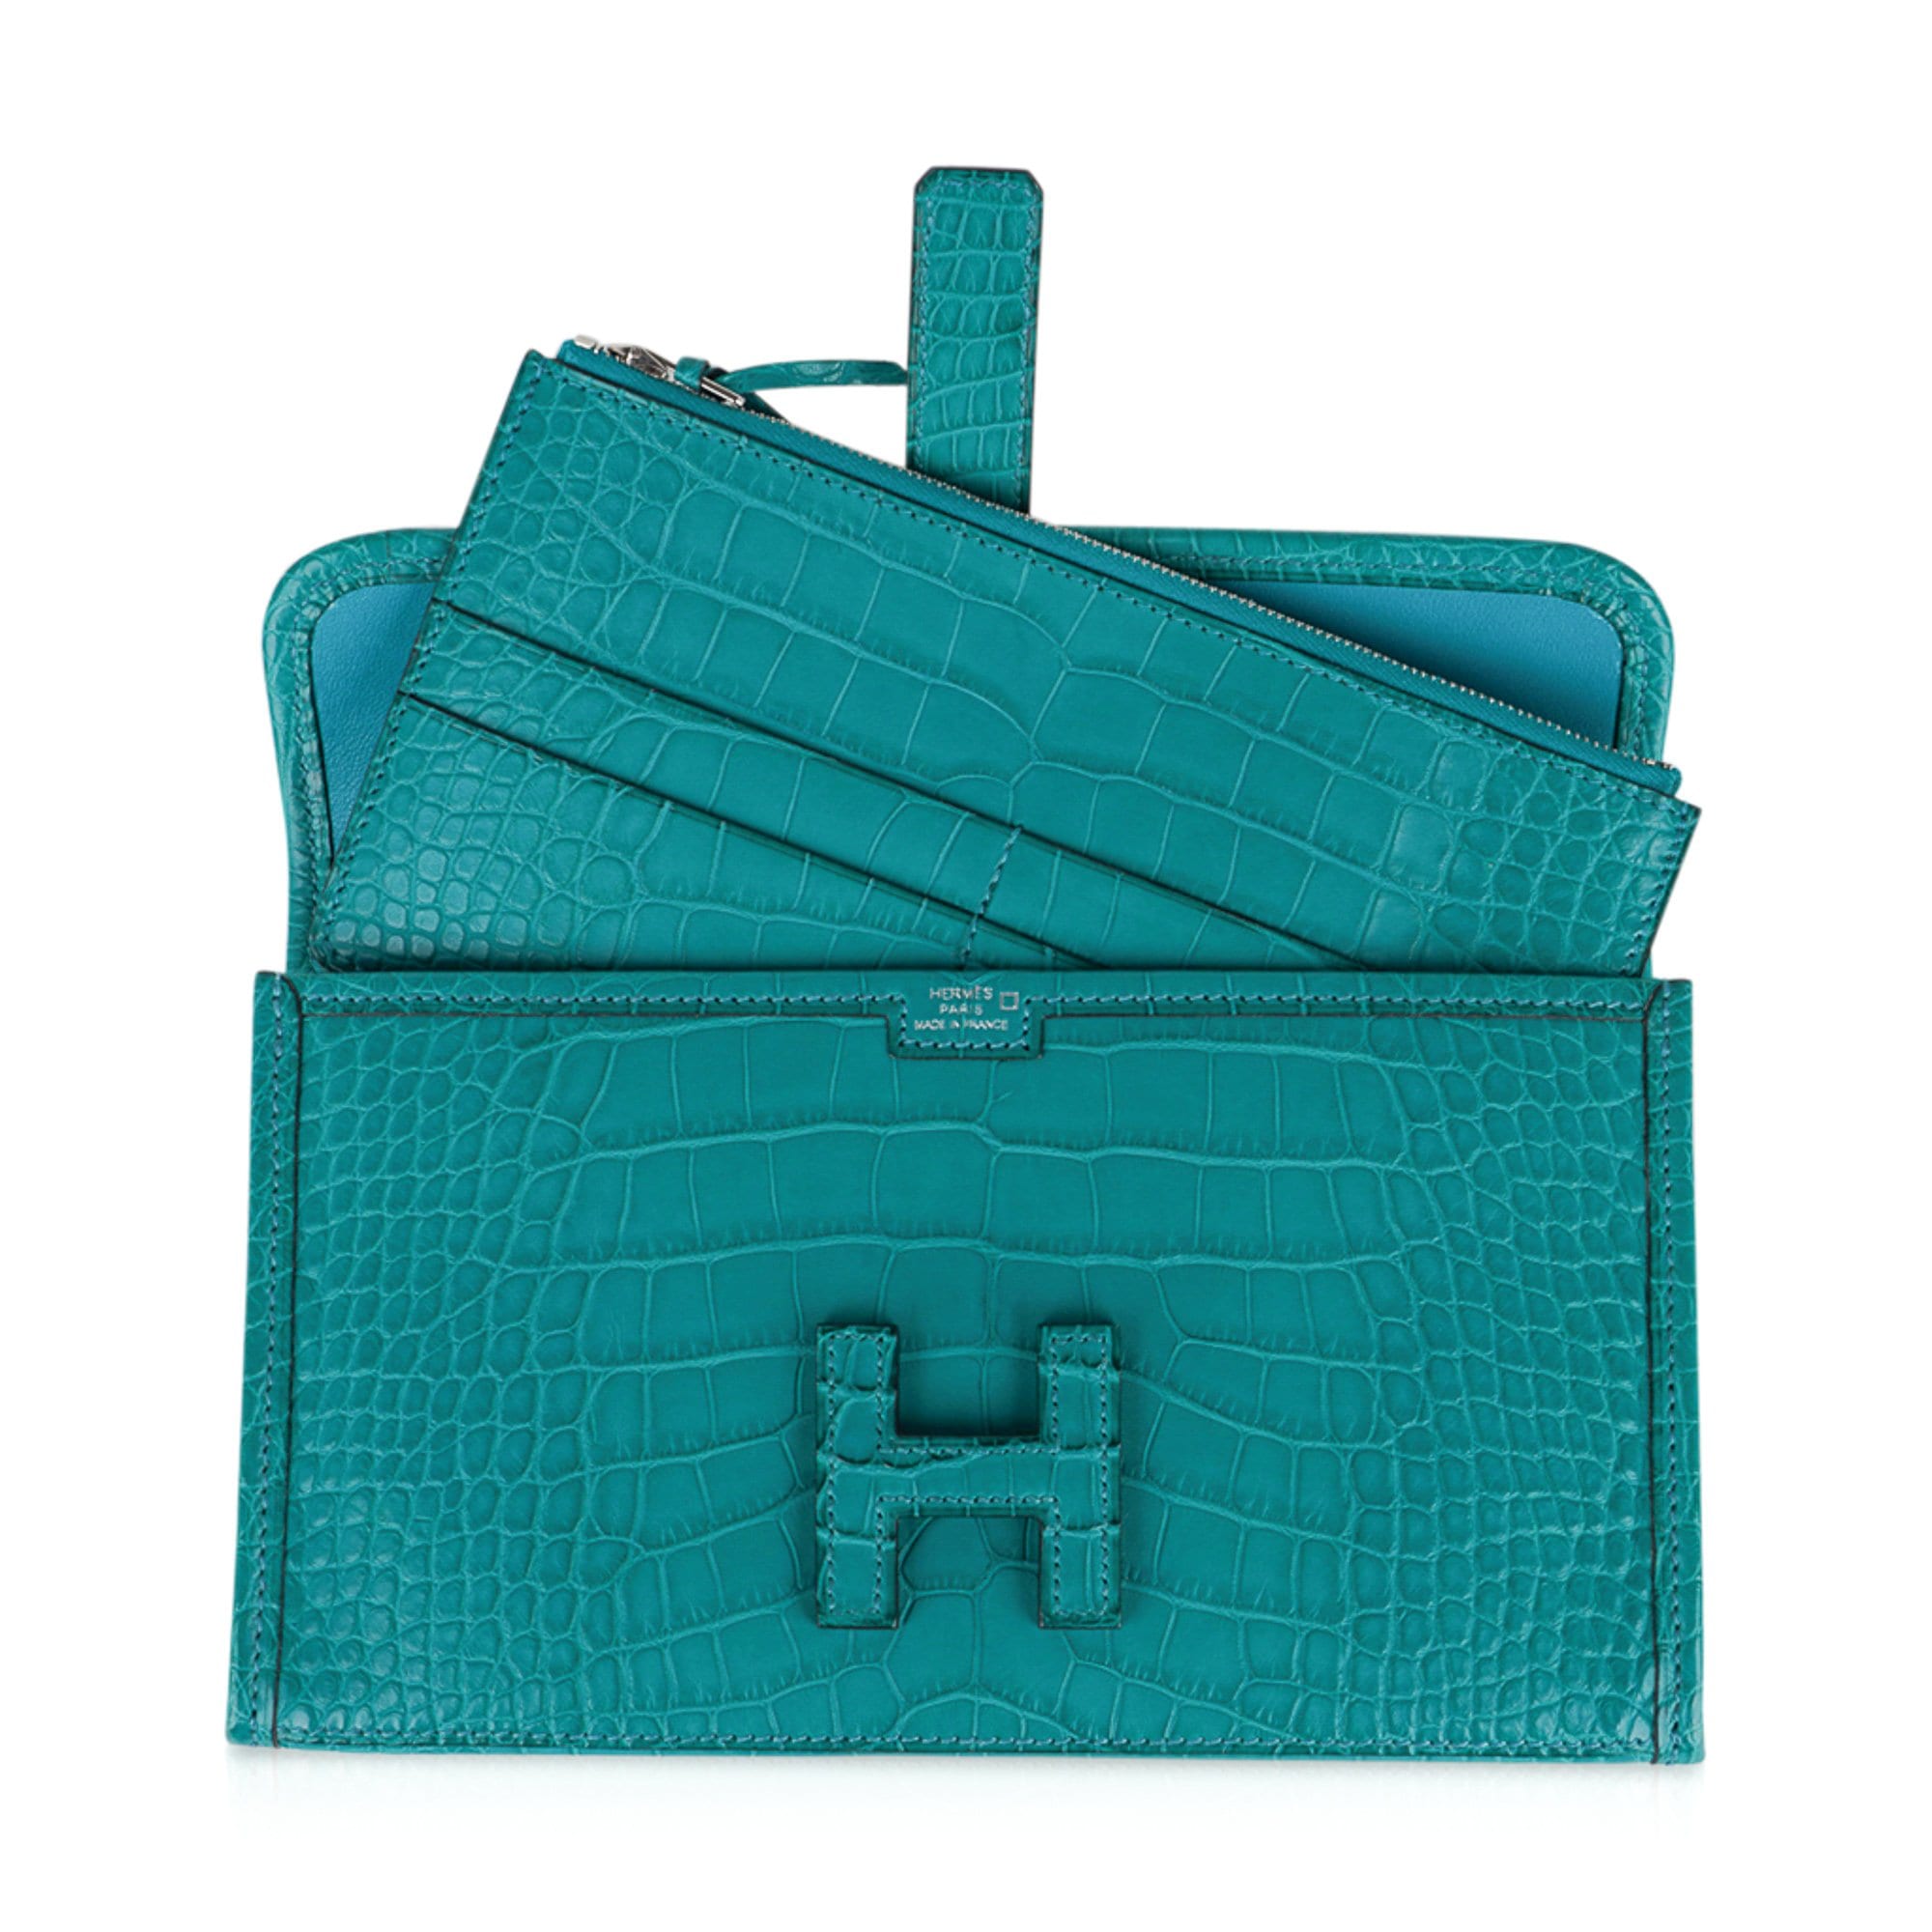 Hermès Swift Jige Duo Clutch - Orange Clutches, Handbags - HER543024